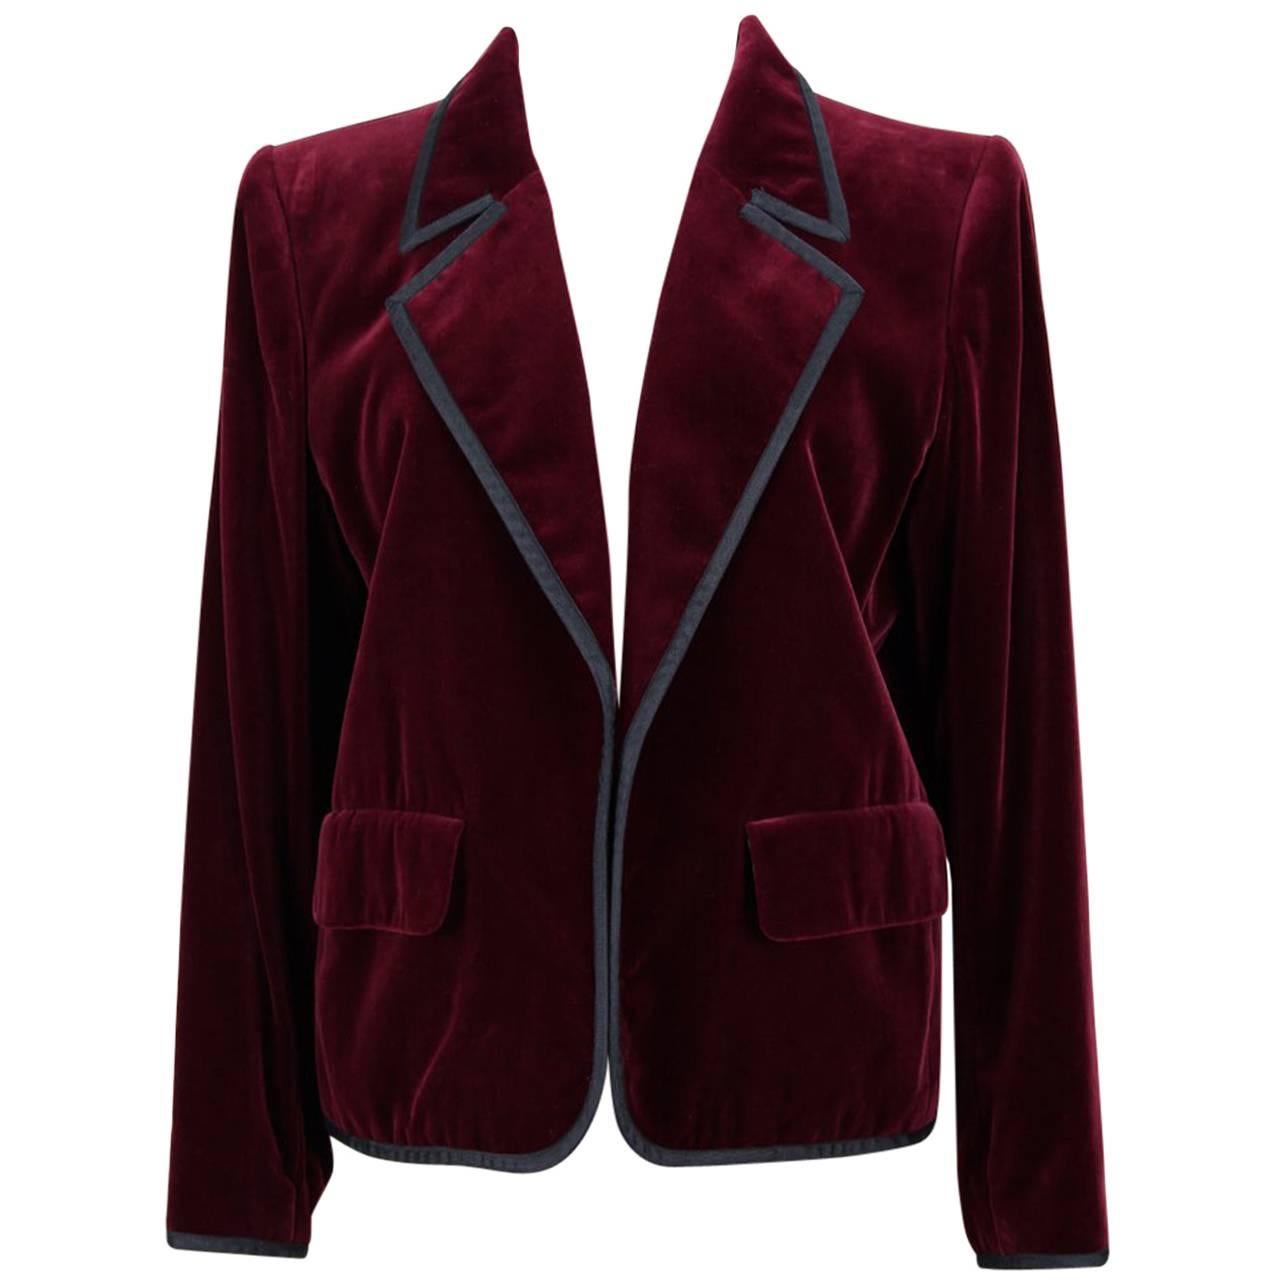 Yves Saint Laurent Vintage Burgundy Red Velvet Blazer Jacket with Ribbon Trim